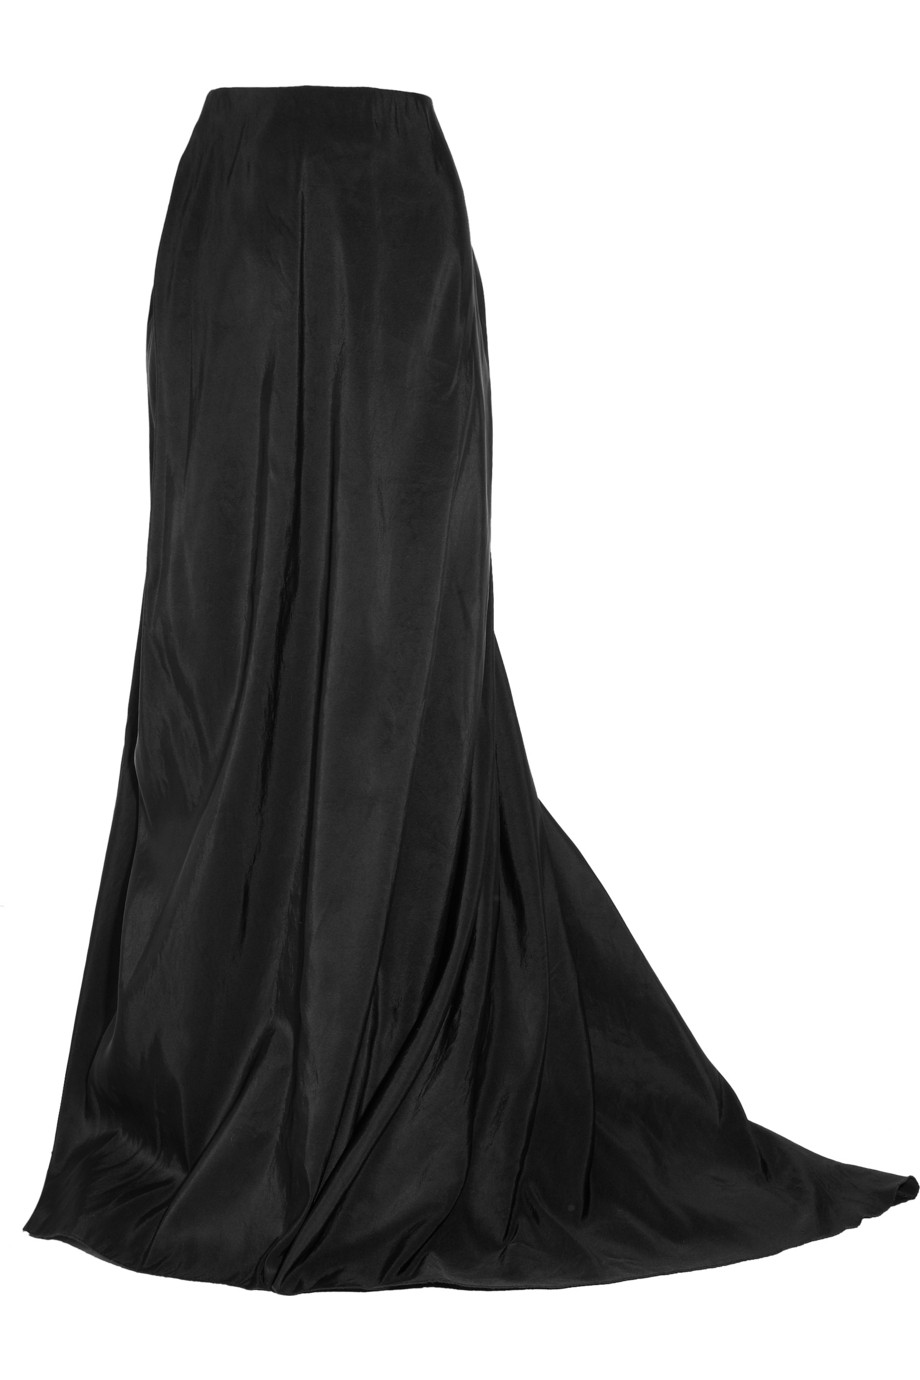 Lyst - Lanvin Silk-faille Ballroom Skirt in Black